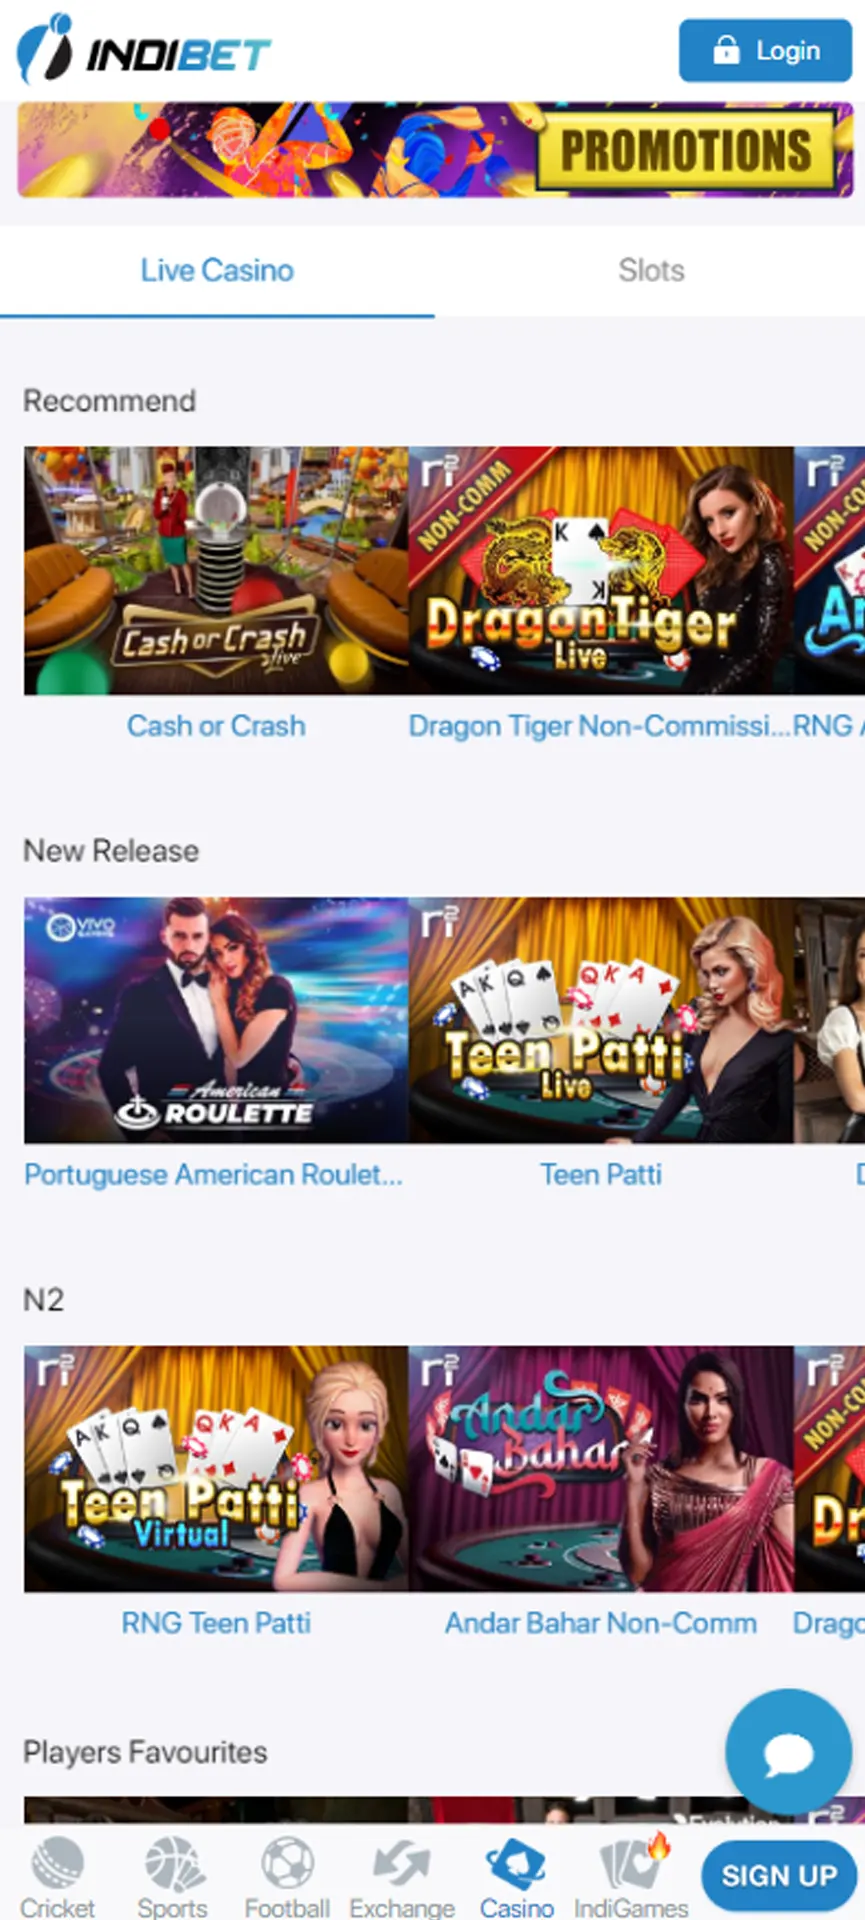 Live casino games in the Indibet App.